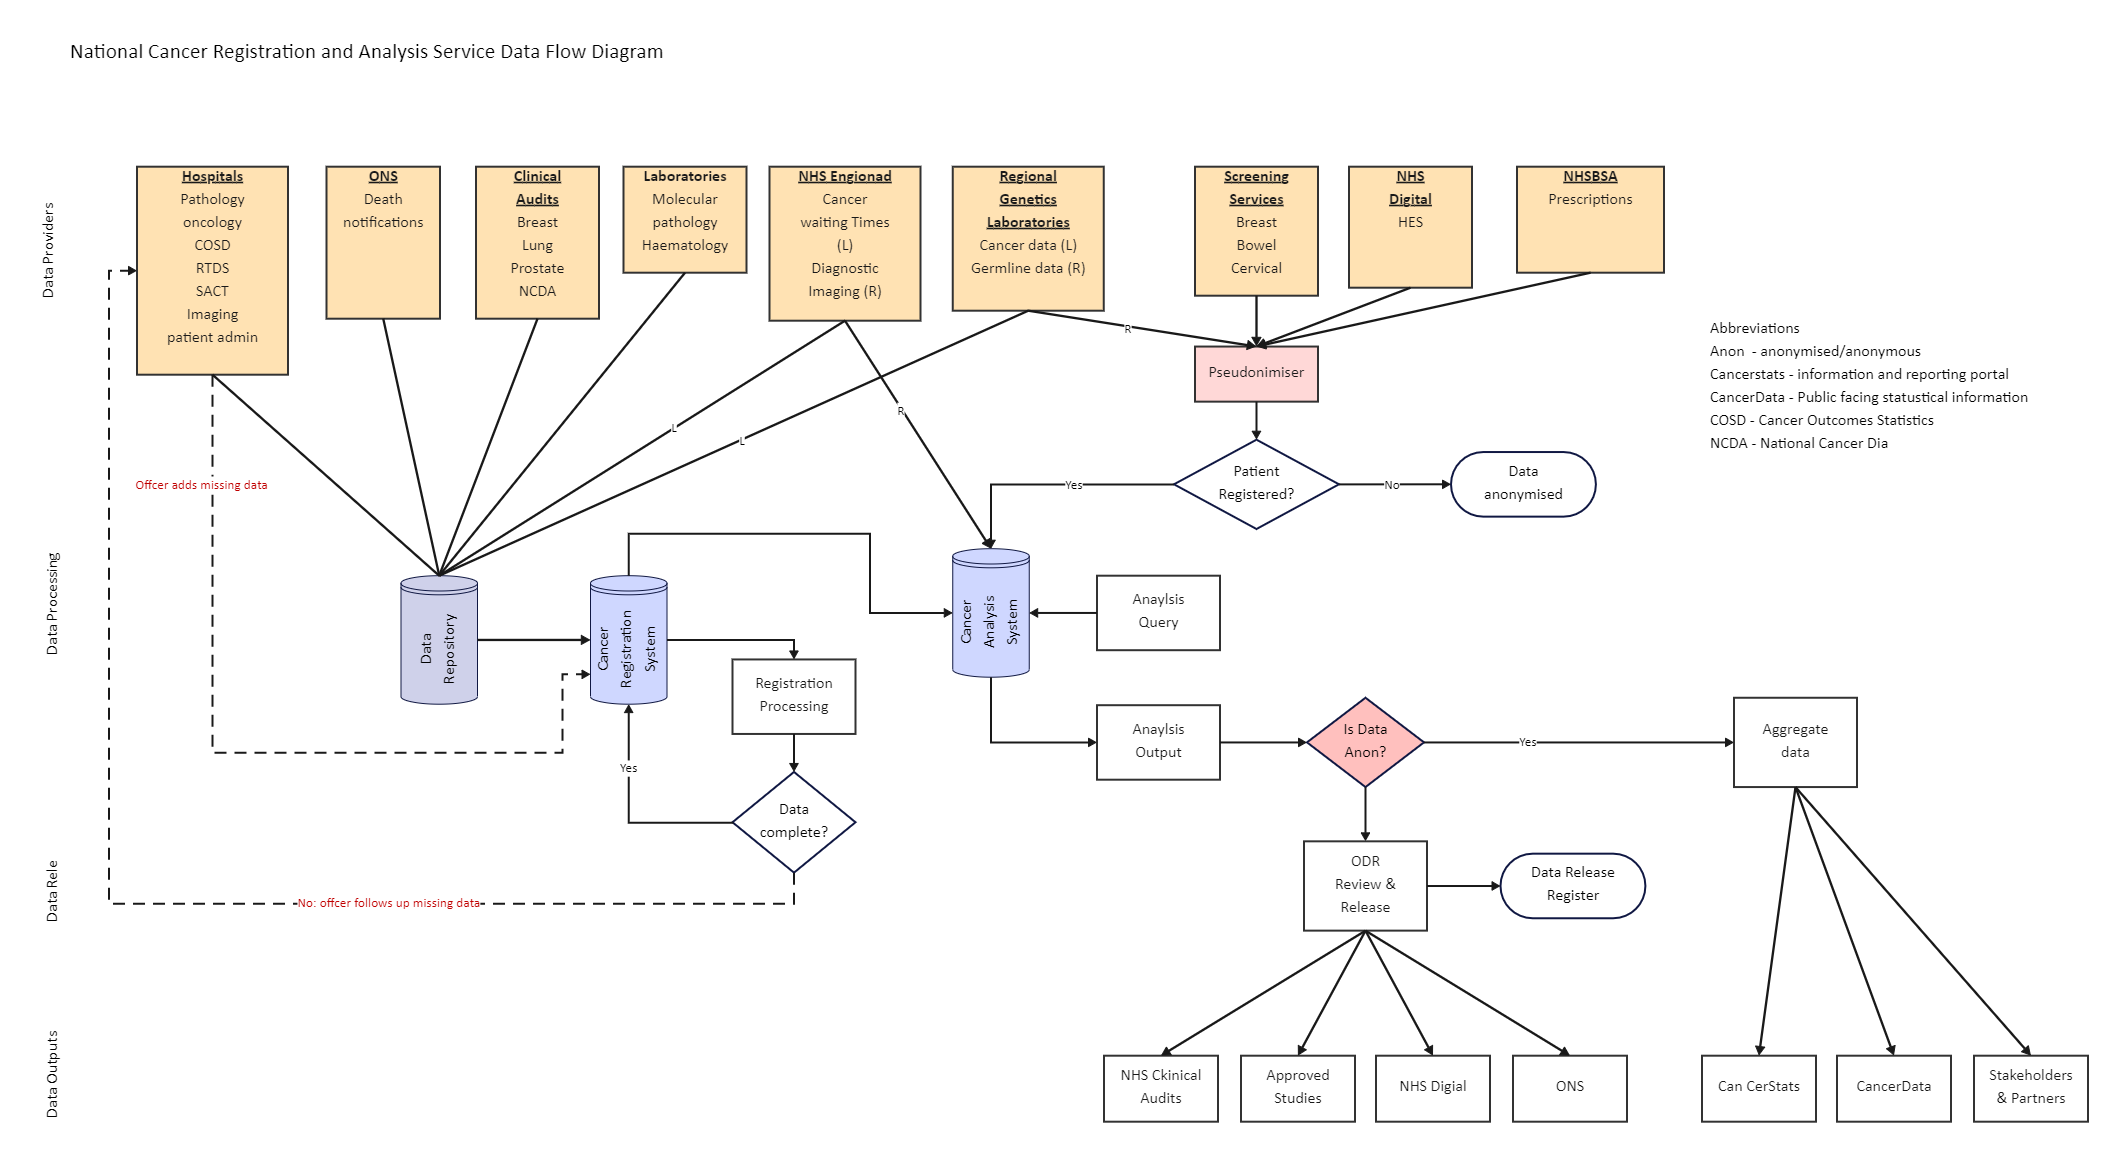 Analysis Service Data Flow Diagram